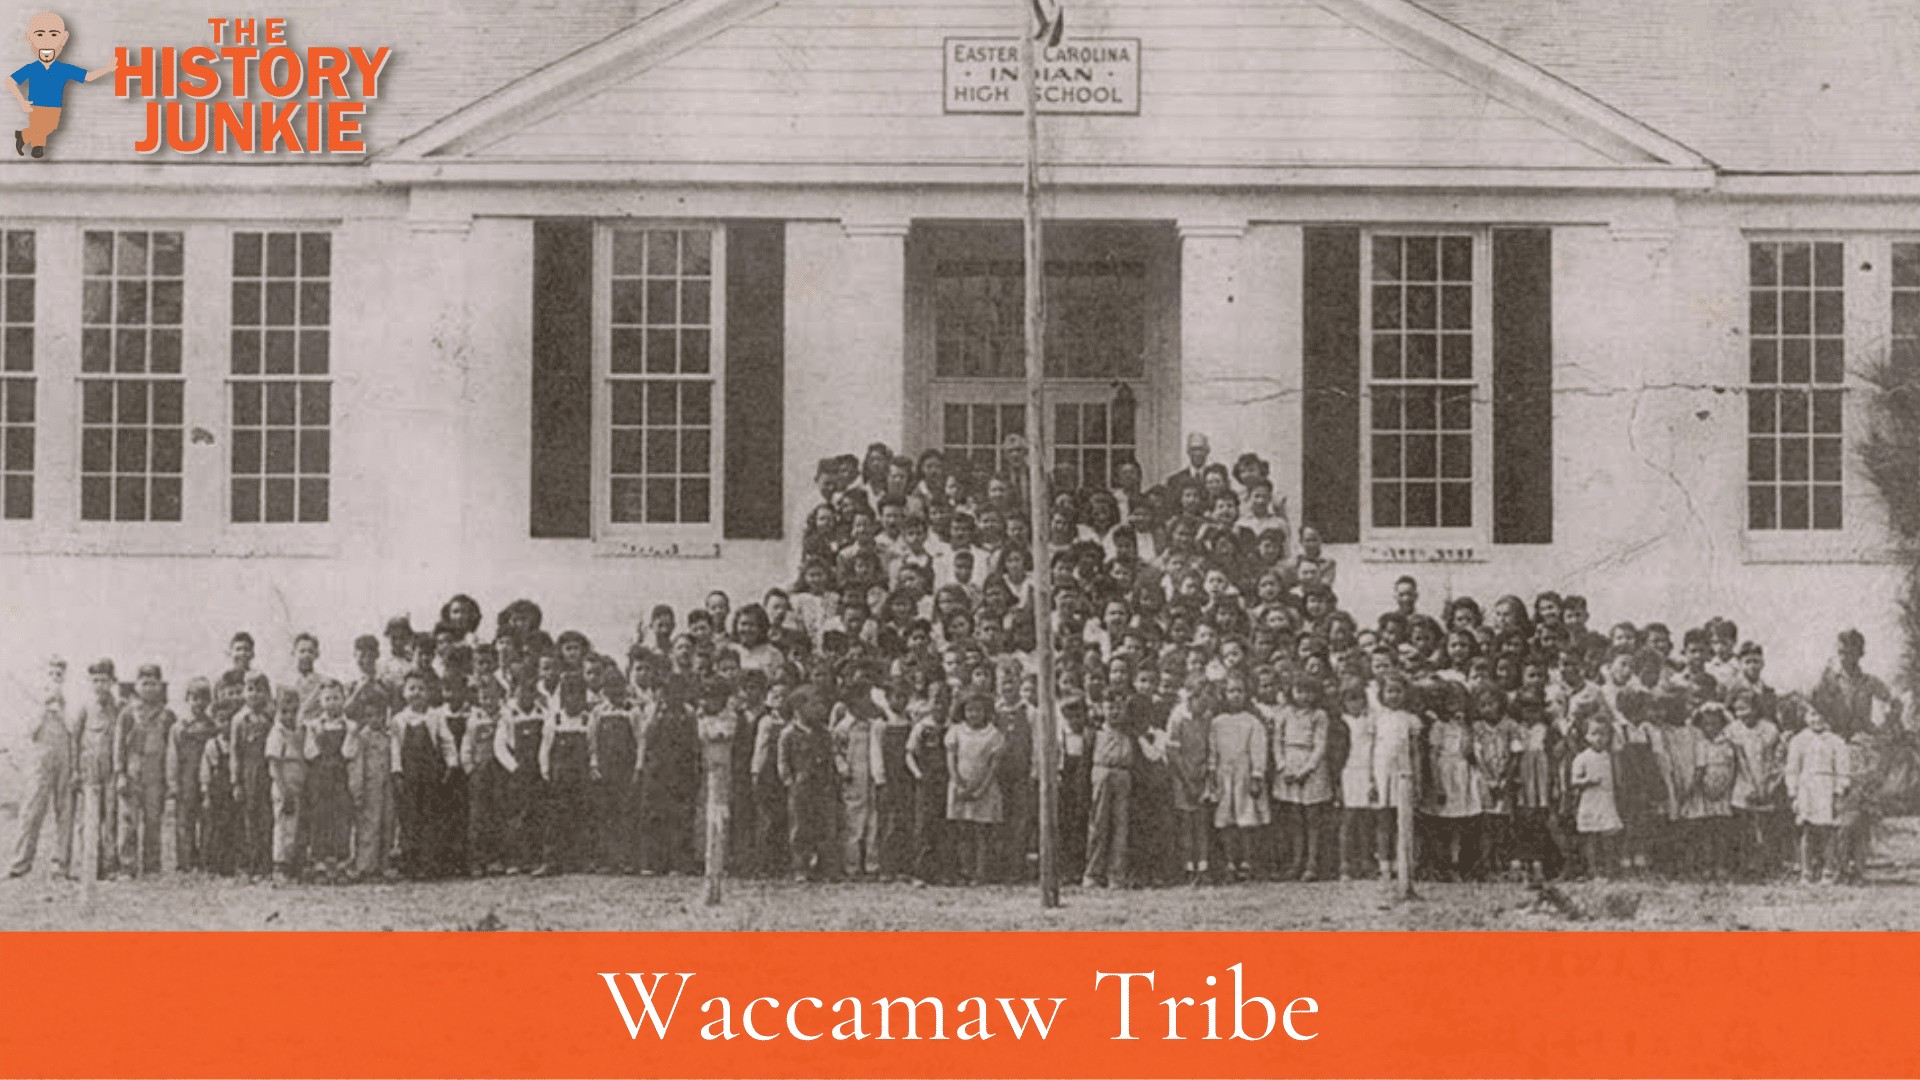 Waccamaw Tribe